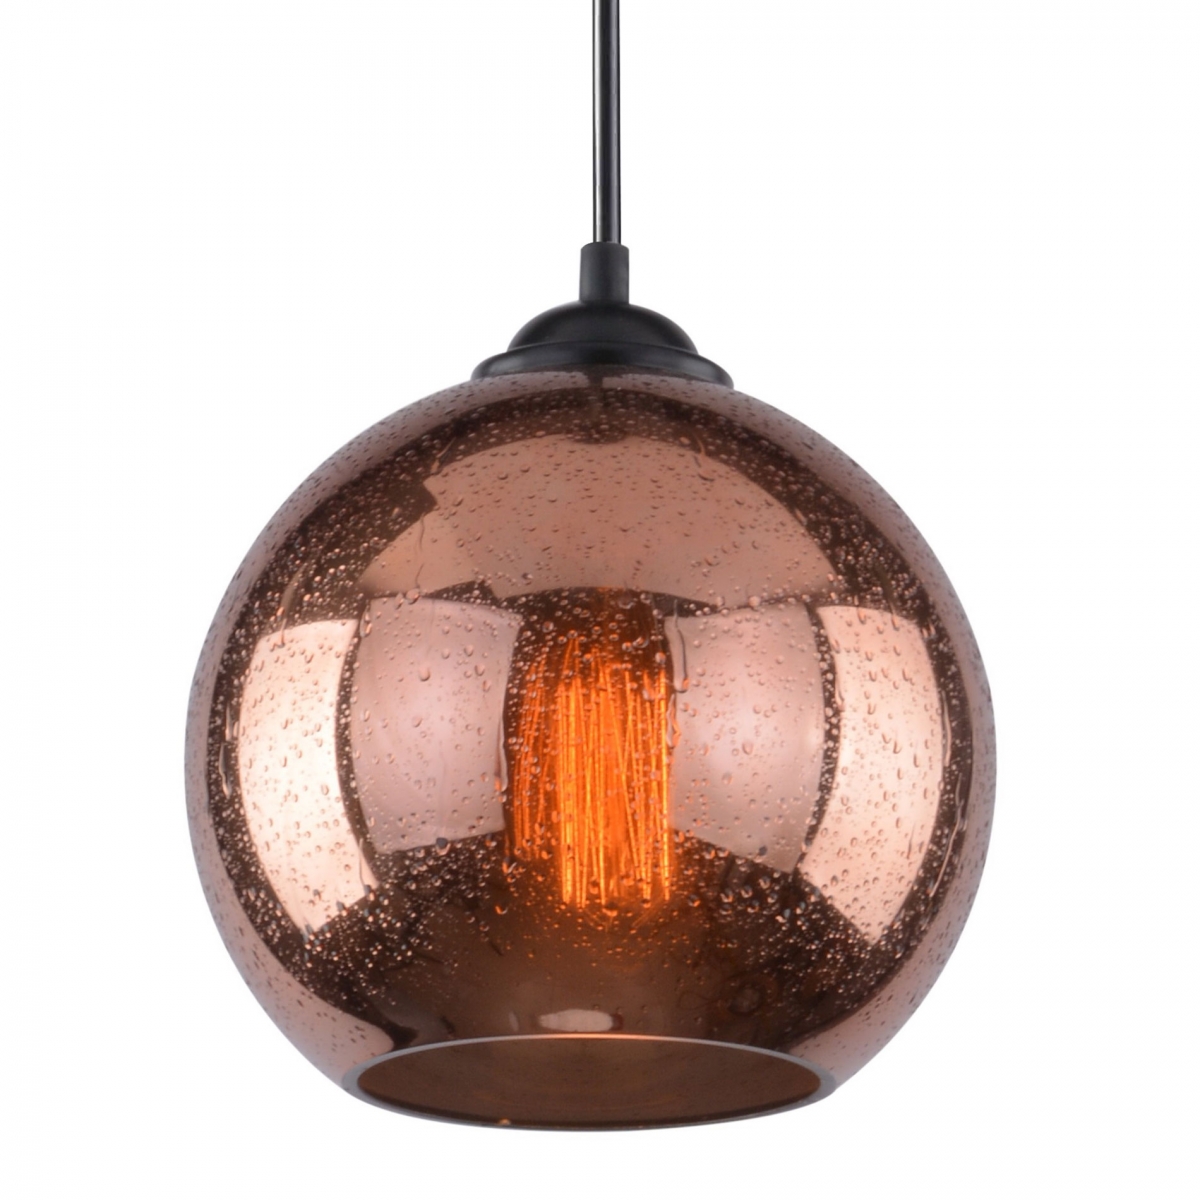 Подвесной светильник Drops Sphere Glass Pendant Lamp copper Loft Concept 40.1983